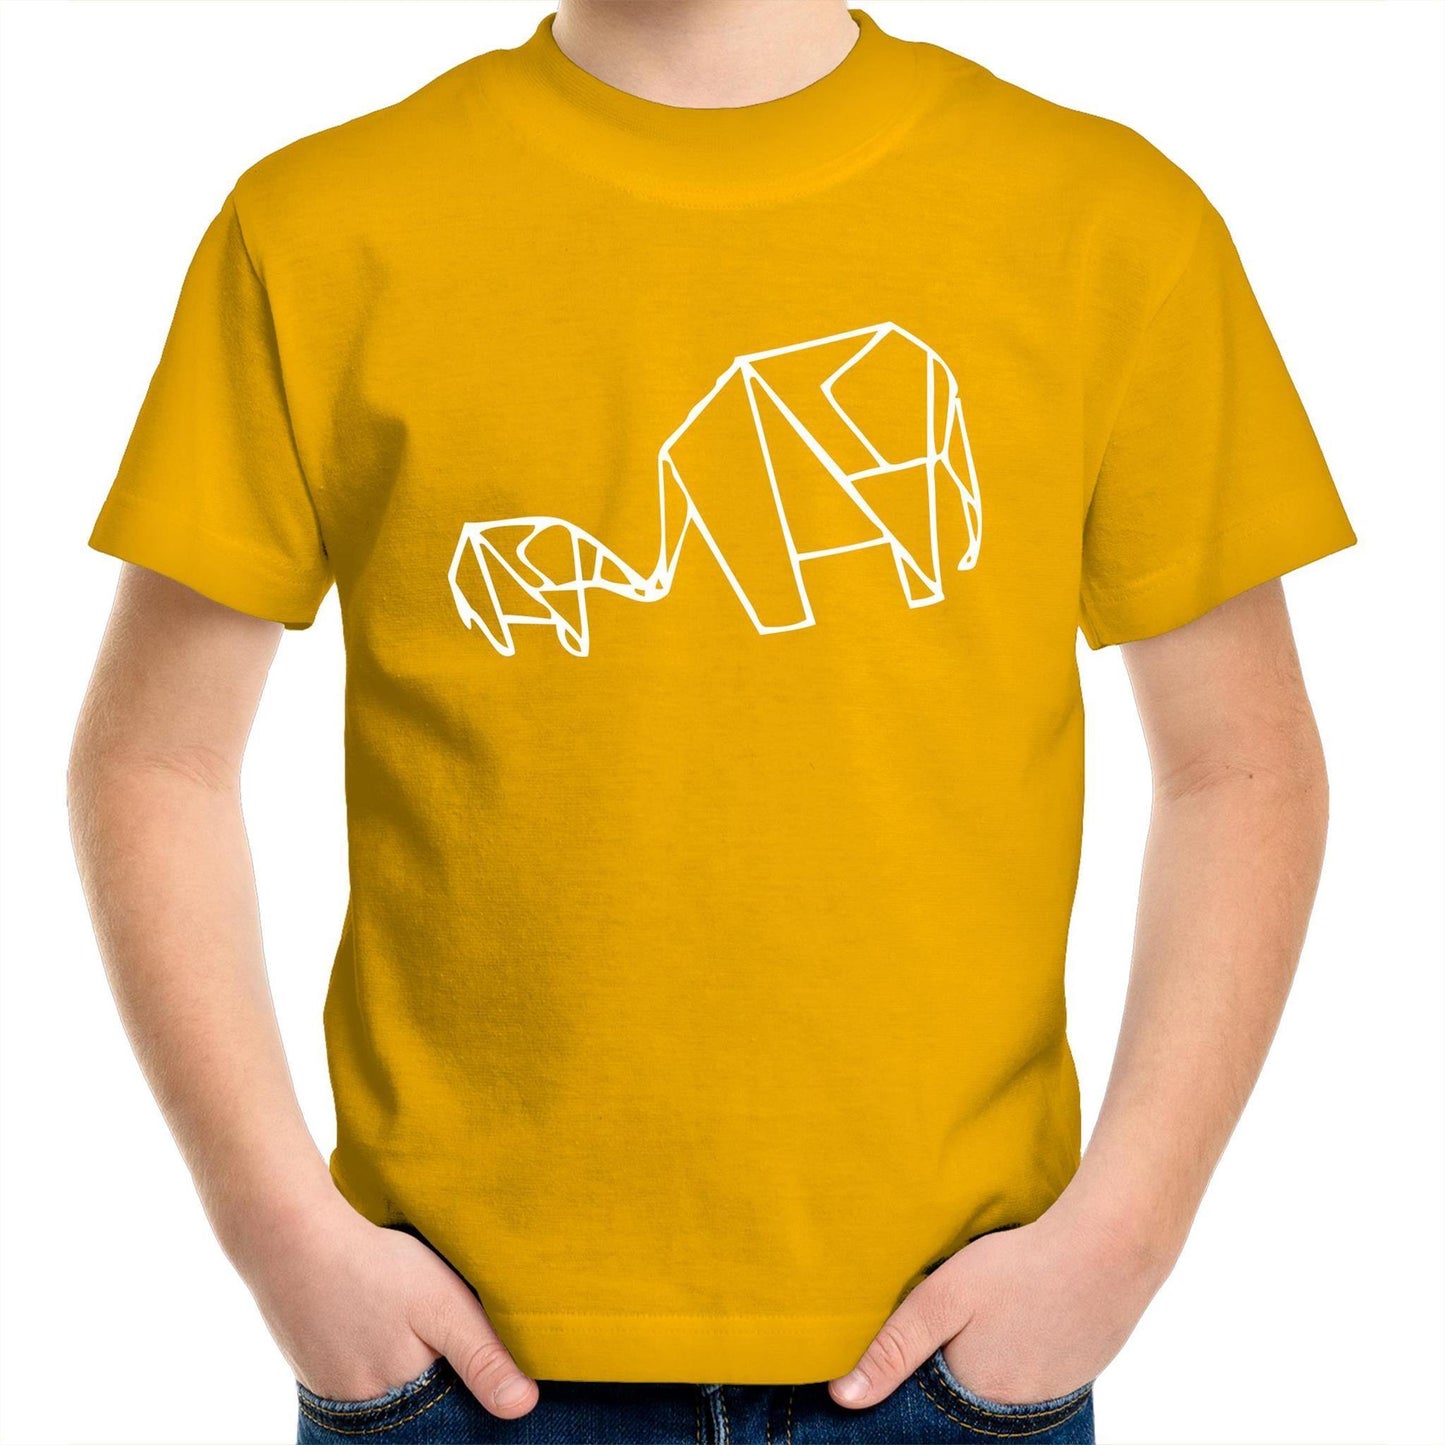 Origami Elephant - Kids Youth Crew T-Shirt Gold Kids Youth T-shirt animal